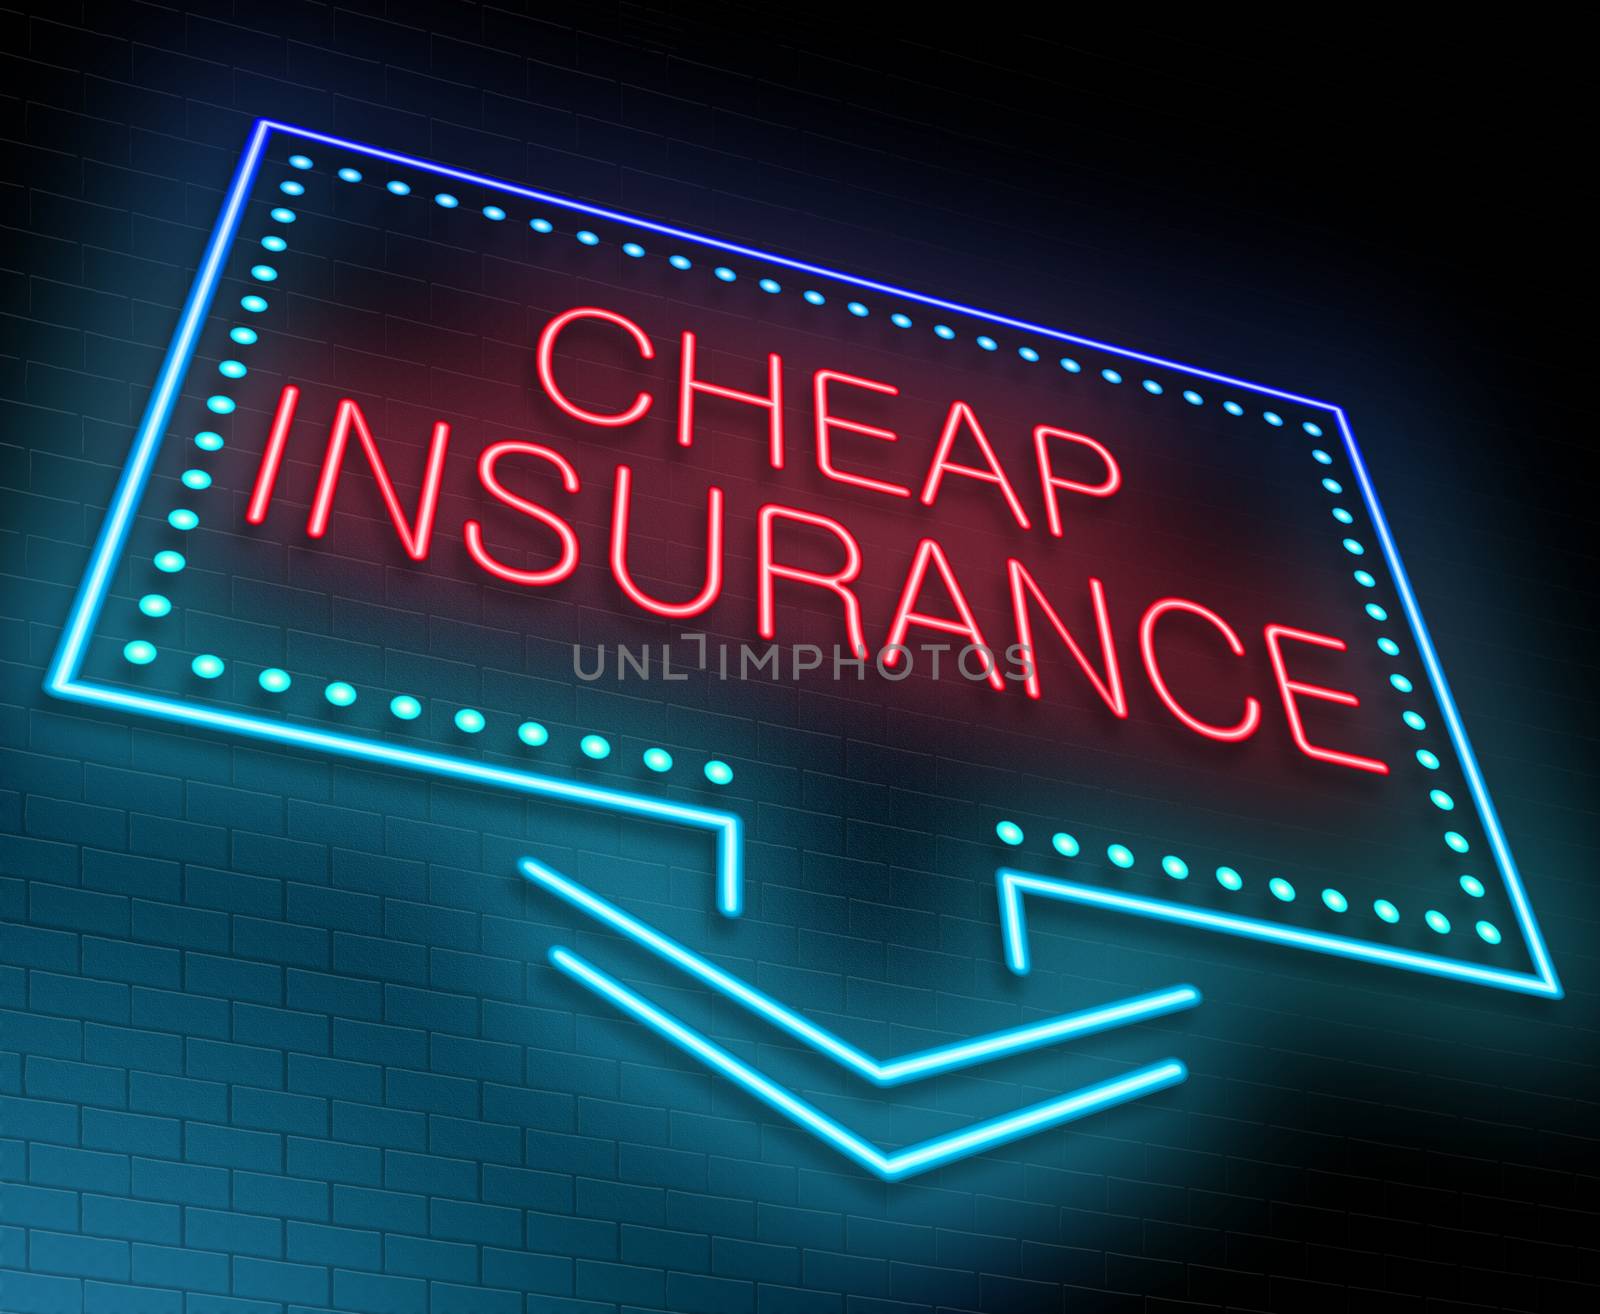 Cheap insurance concept. by 72soul